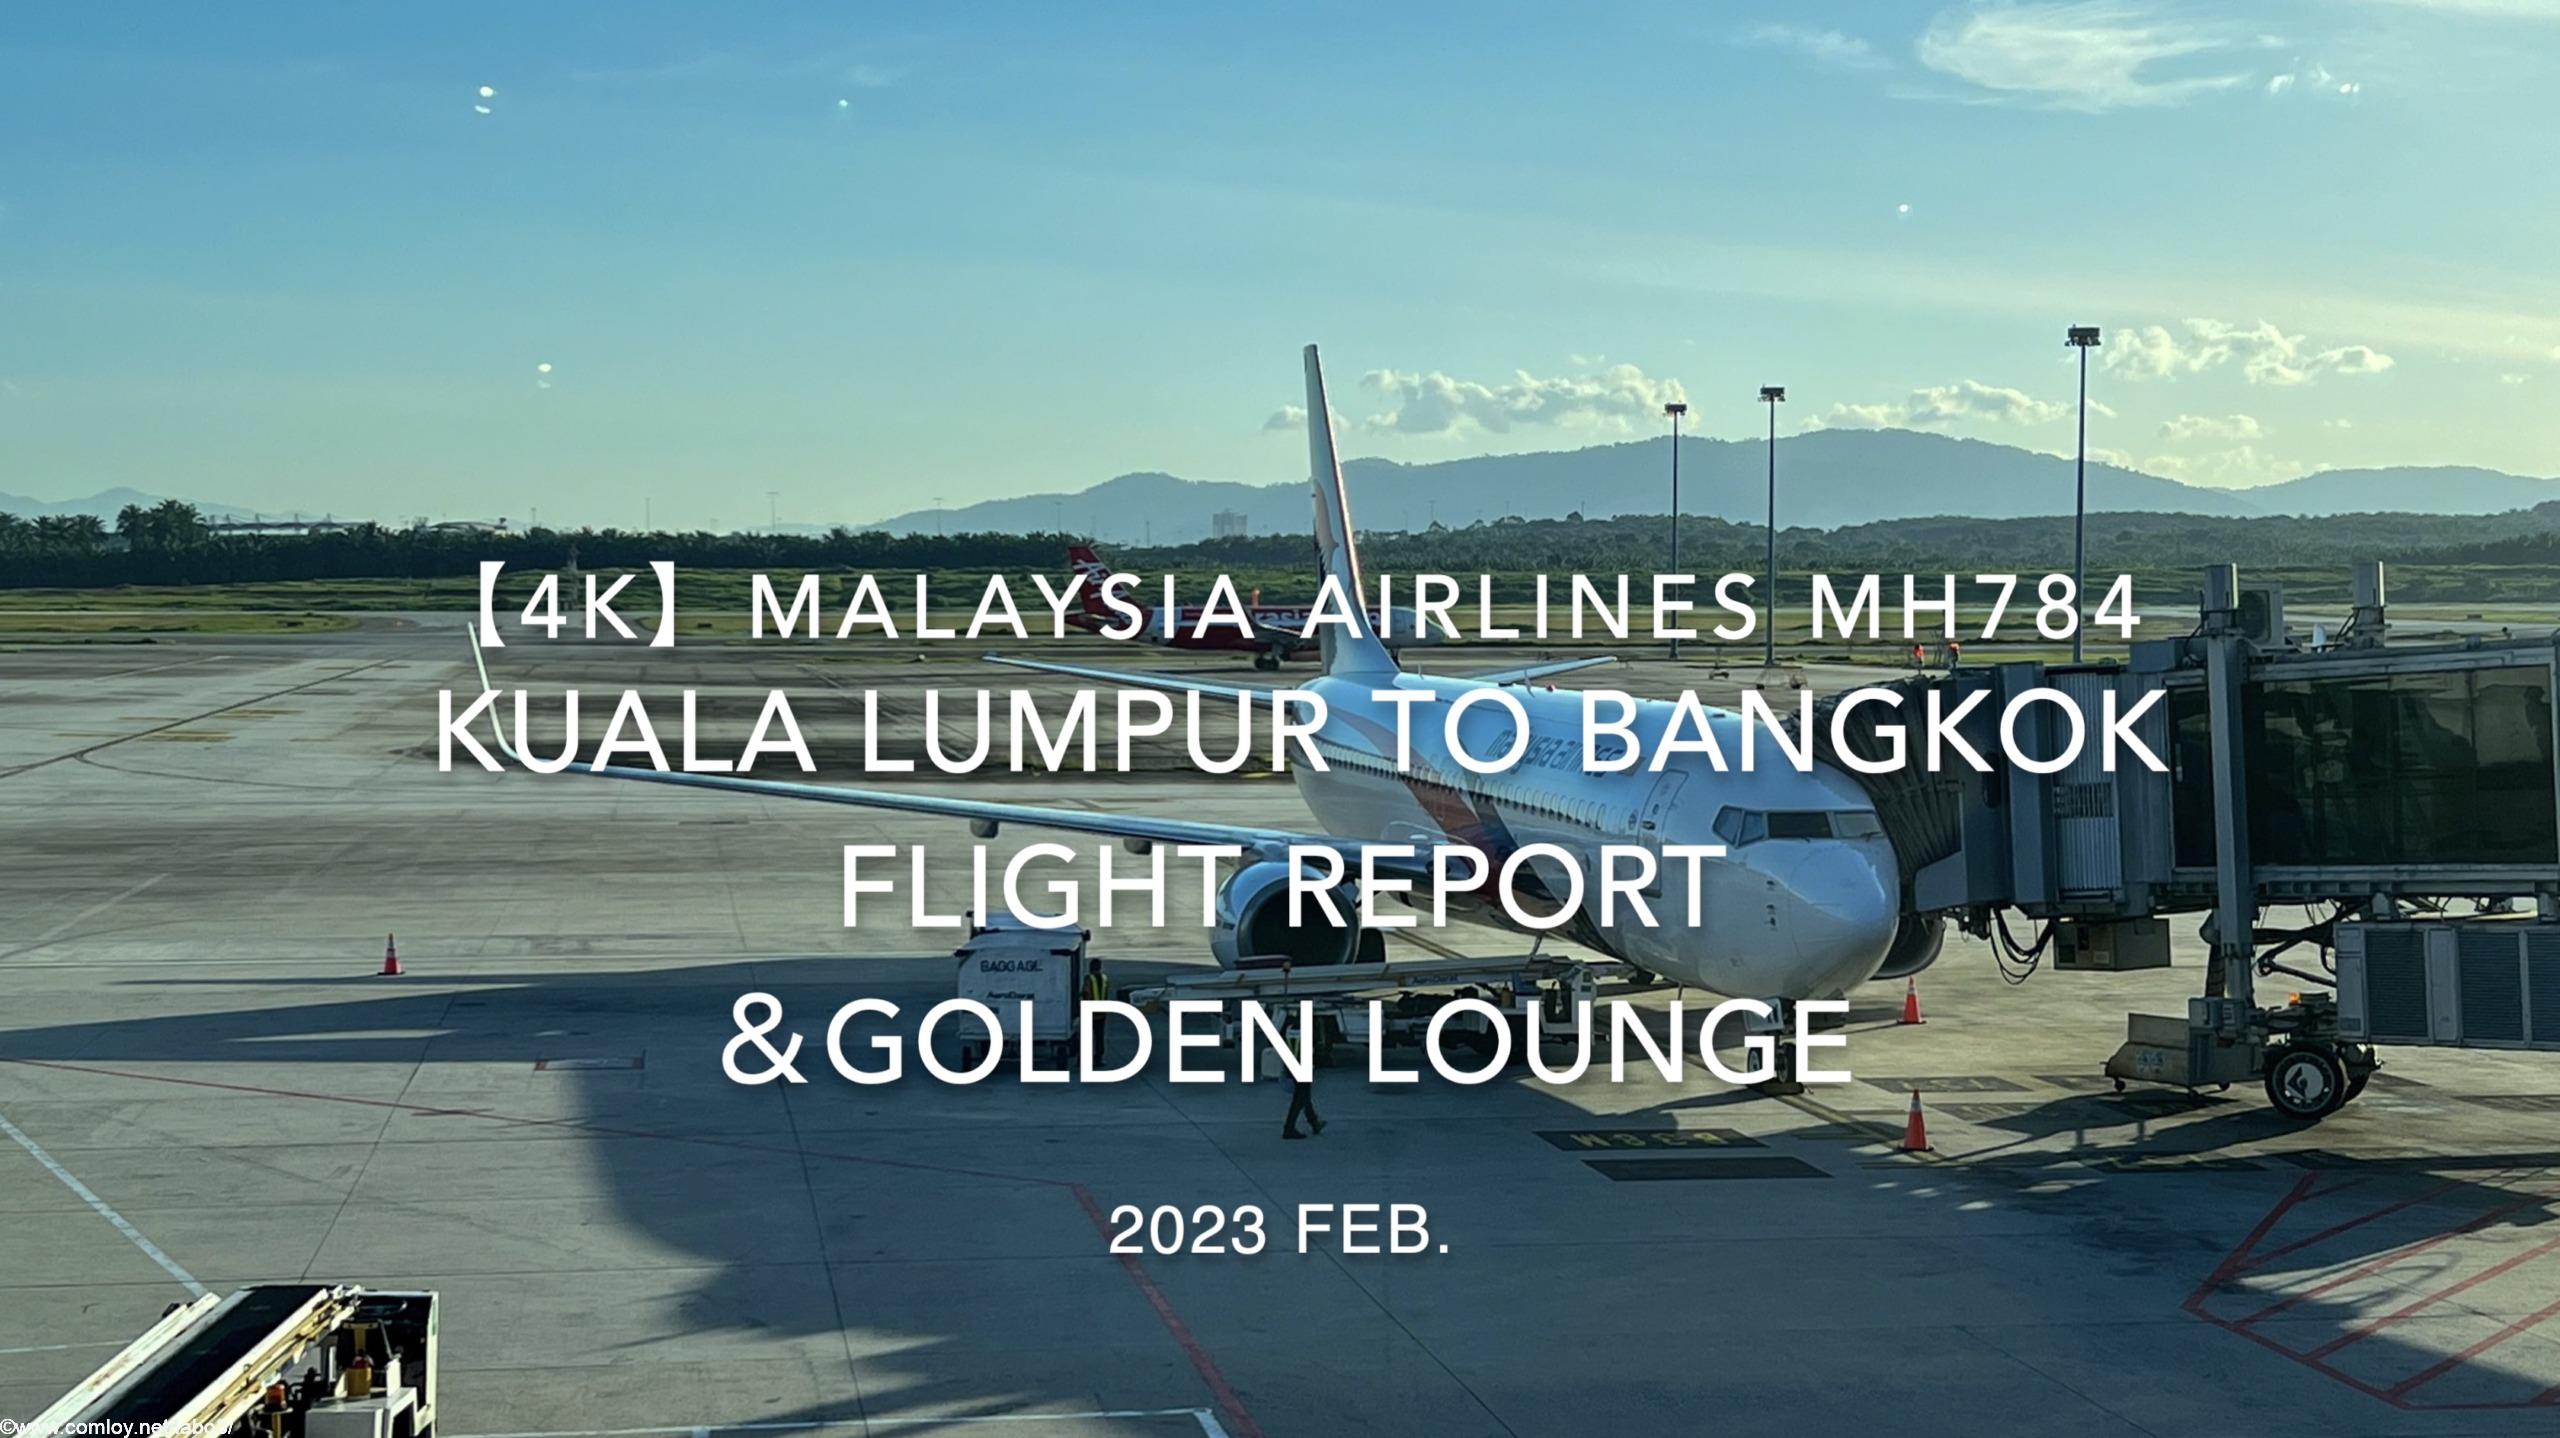 【Flight Report 4K】2023 Feb Malaysia Airlines MH784 Kuala Lumpur to BANGKOK and Golden Lounge マレーシア航空 クアラルンプール - バンコク 搭乗記